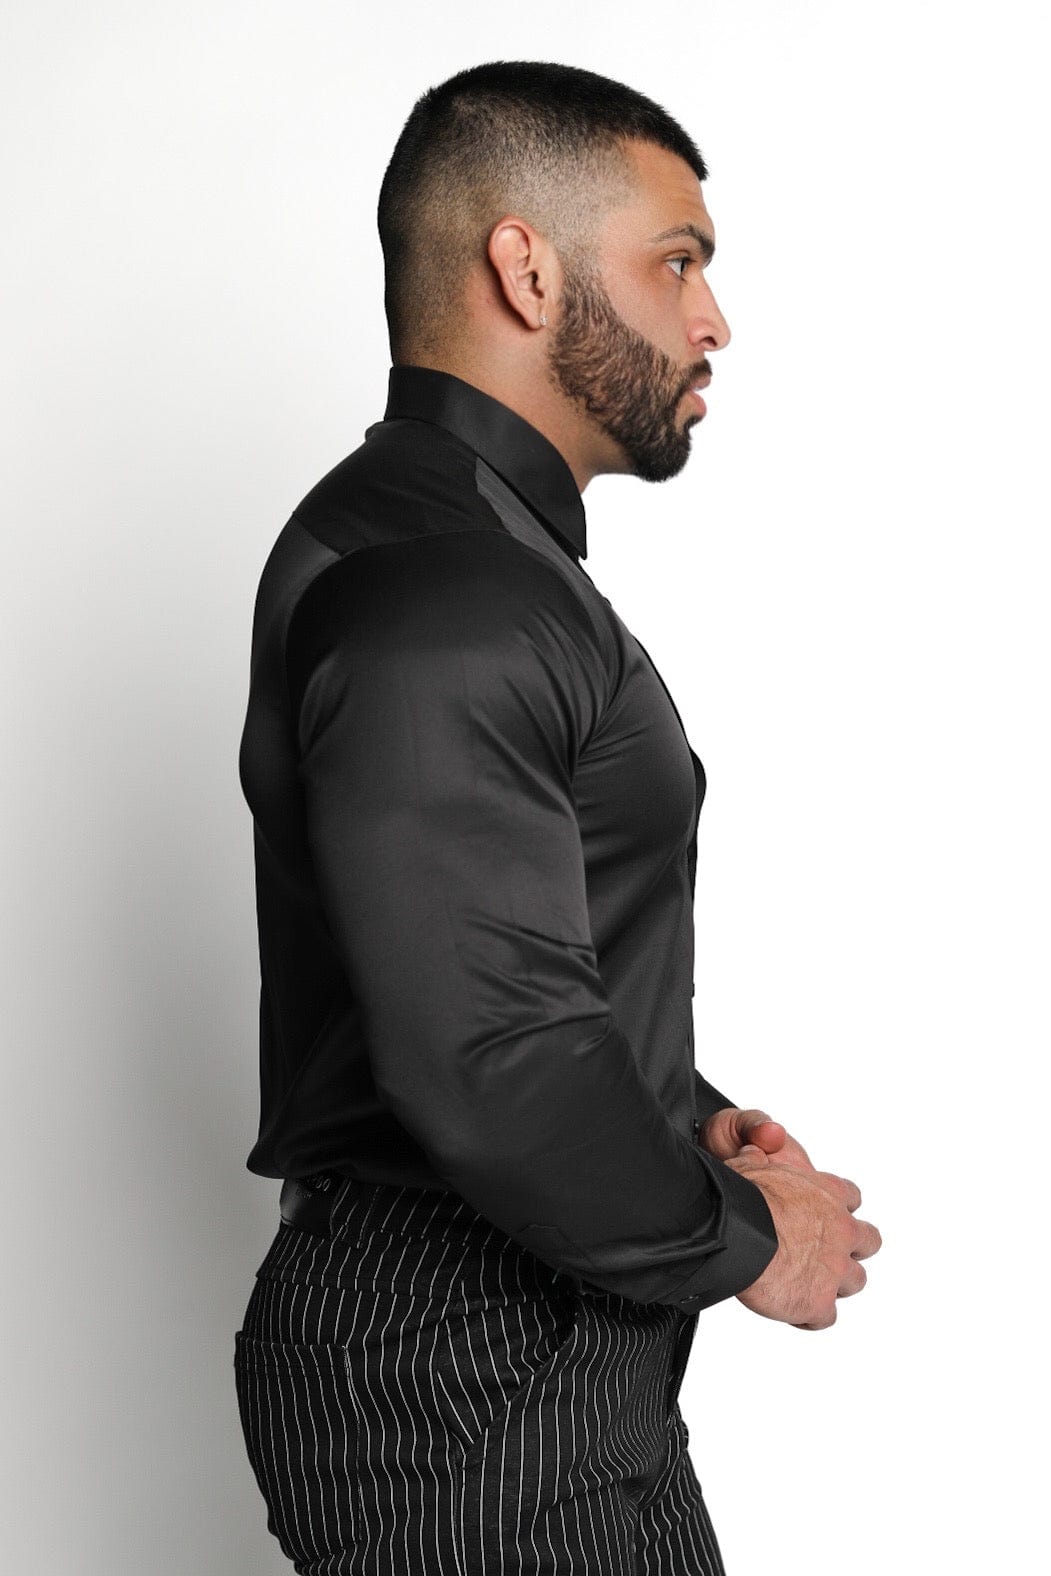 Mens Black Athletic Fit Dress Shirt - Gerardo Collection